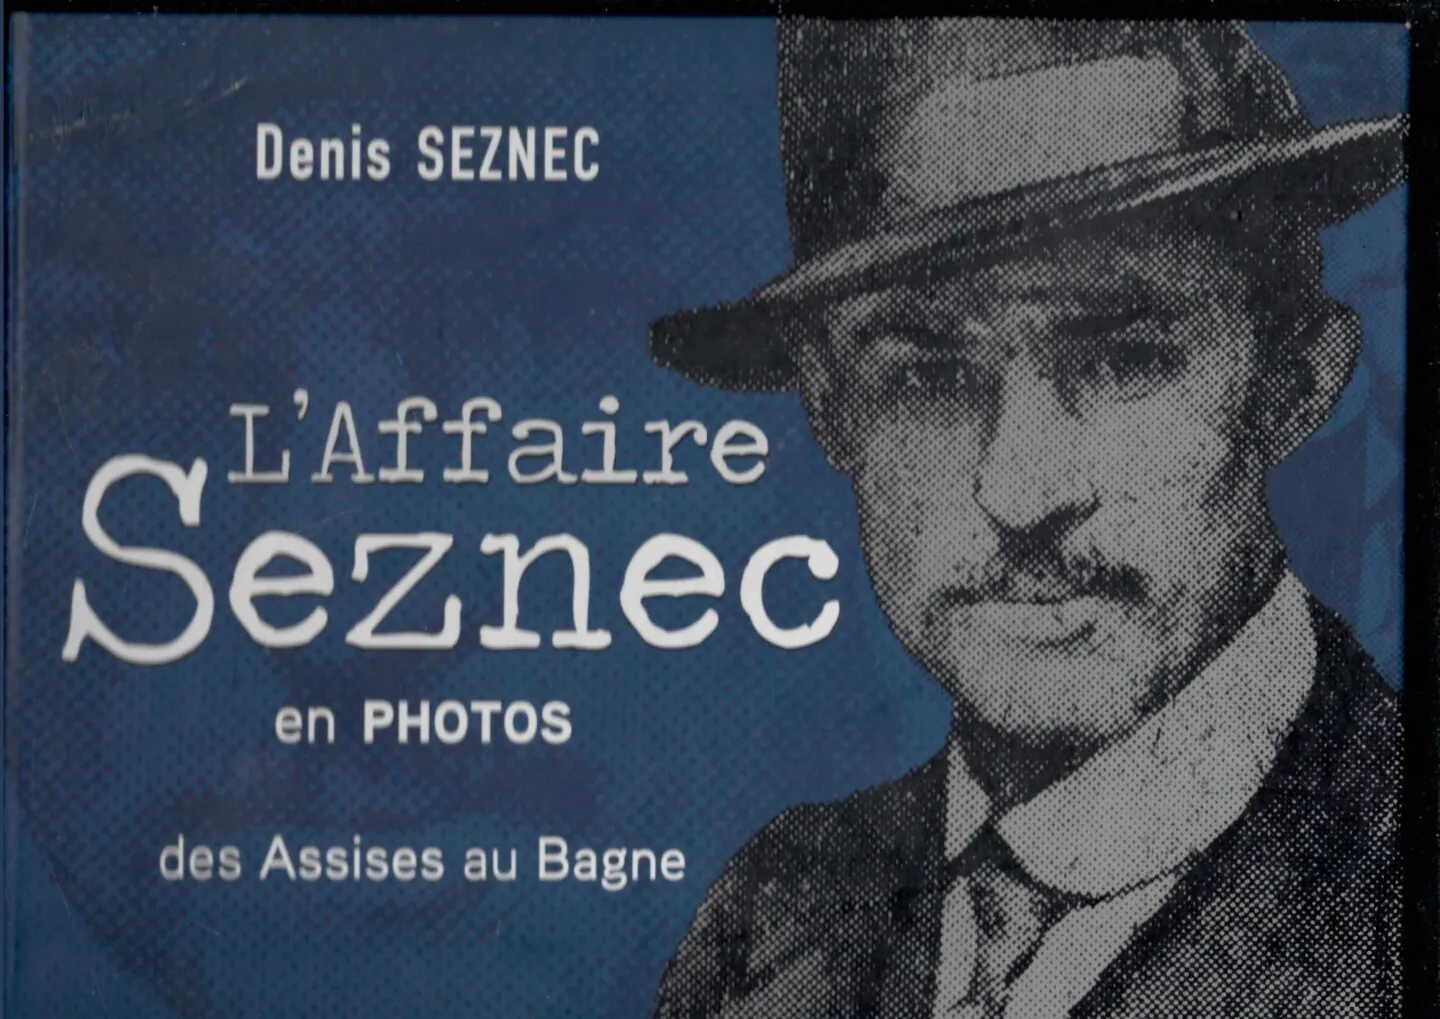 Affaire Guillaume Seznec